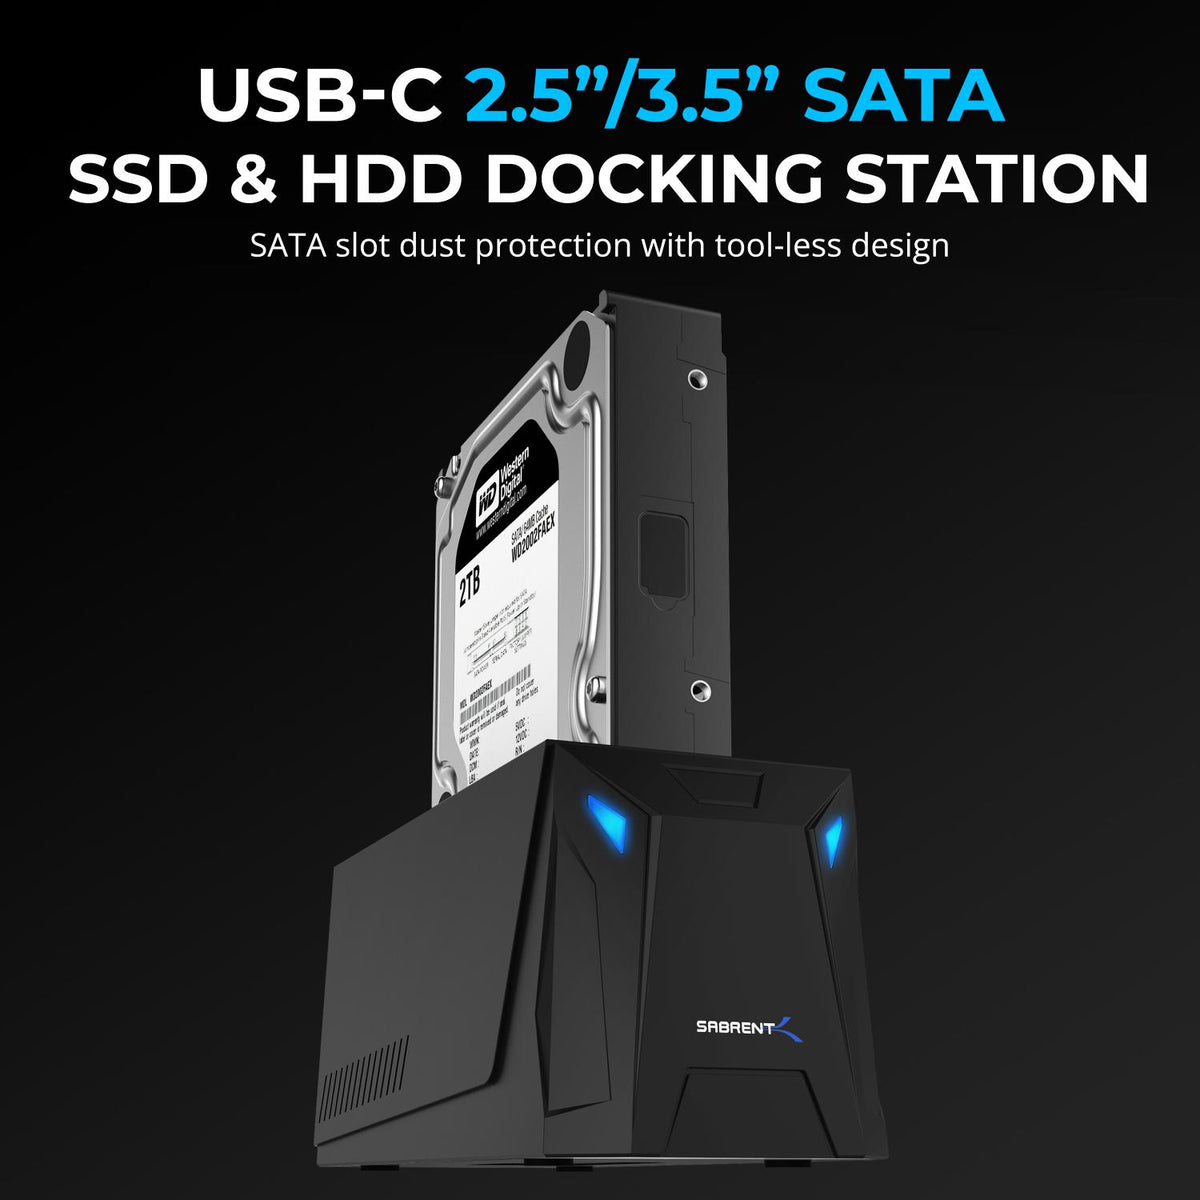 USB-C Hard Drive Docking Station